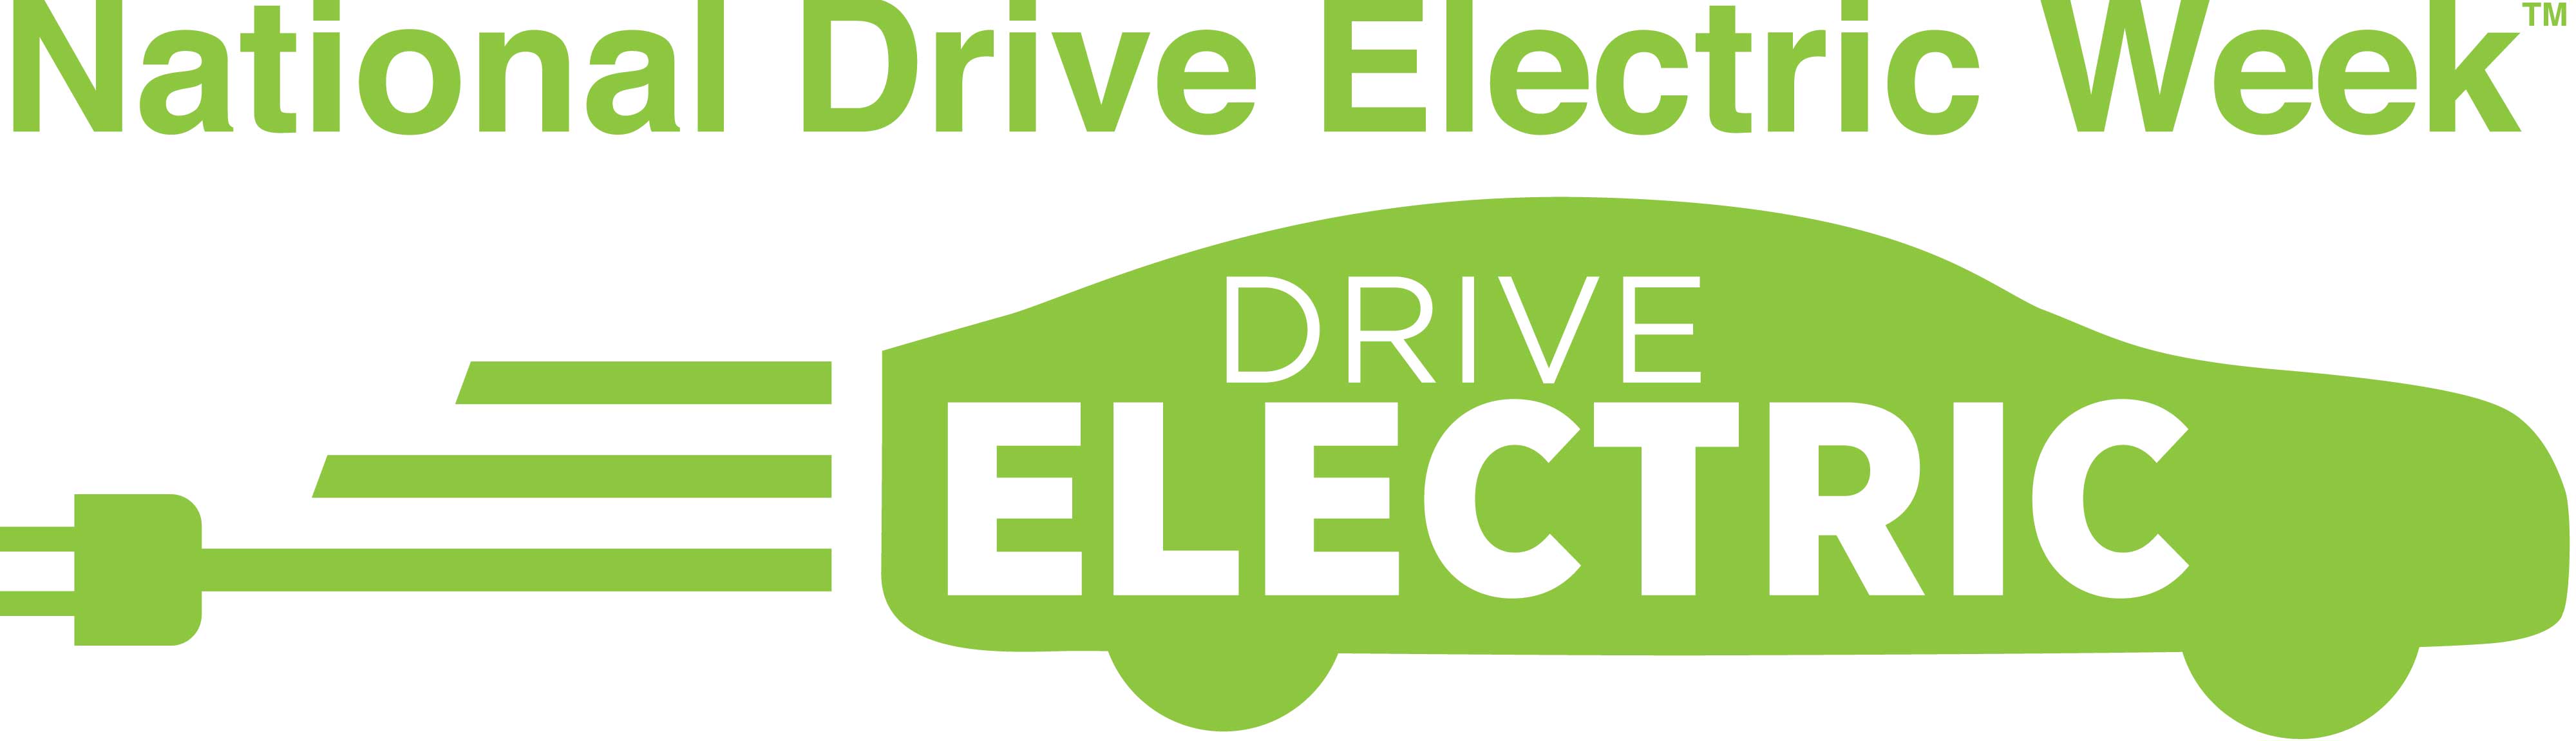 https://driveelectricweek.org/resources/ndew-logo-2015.jpg